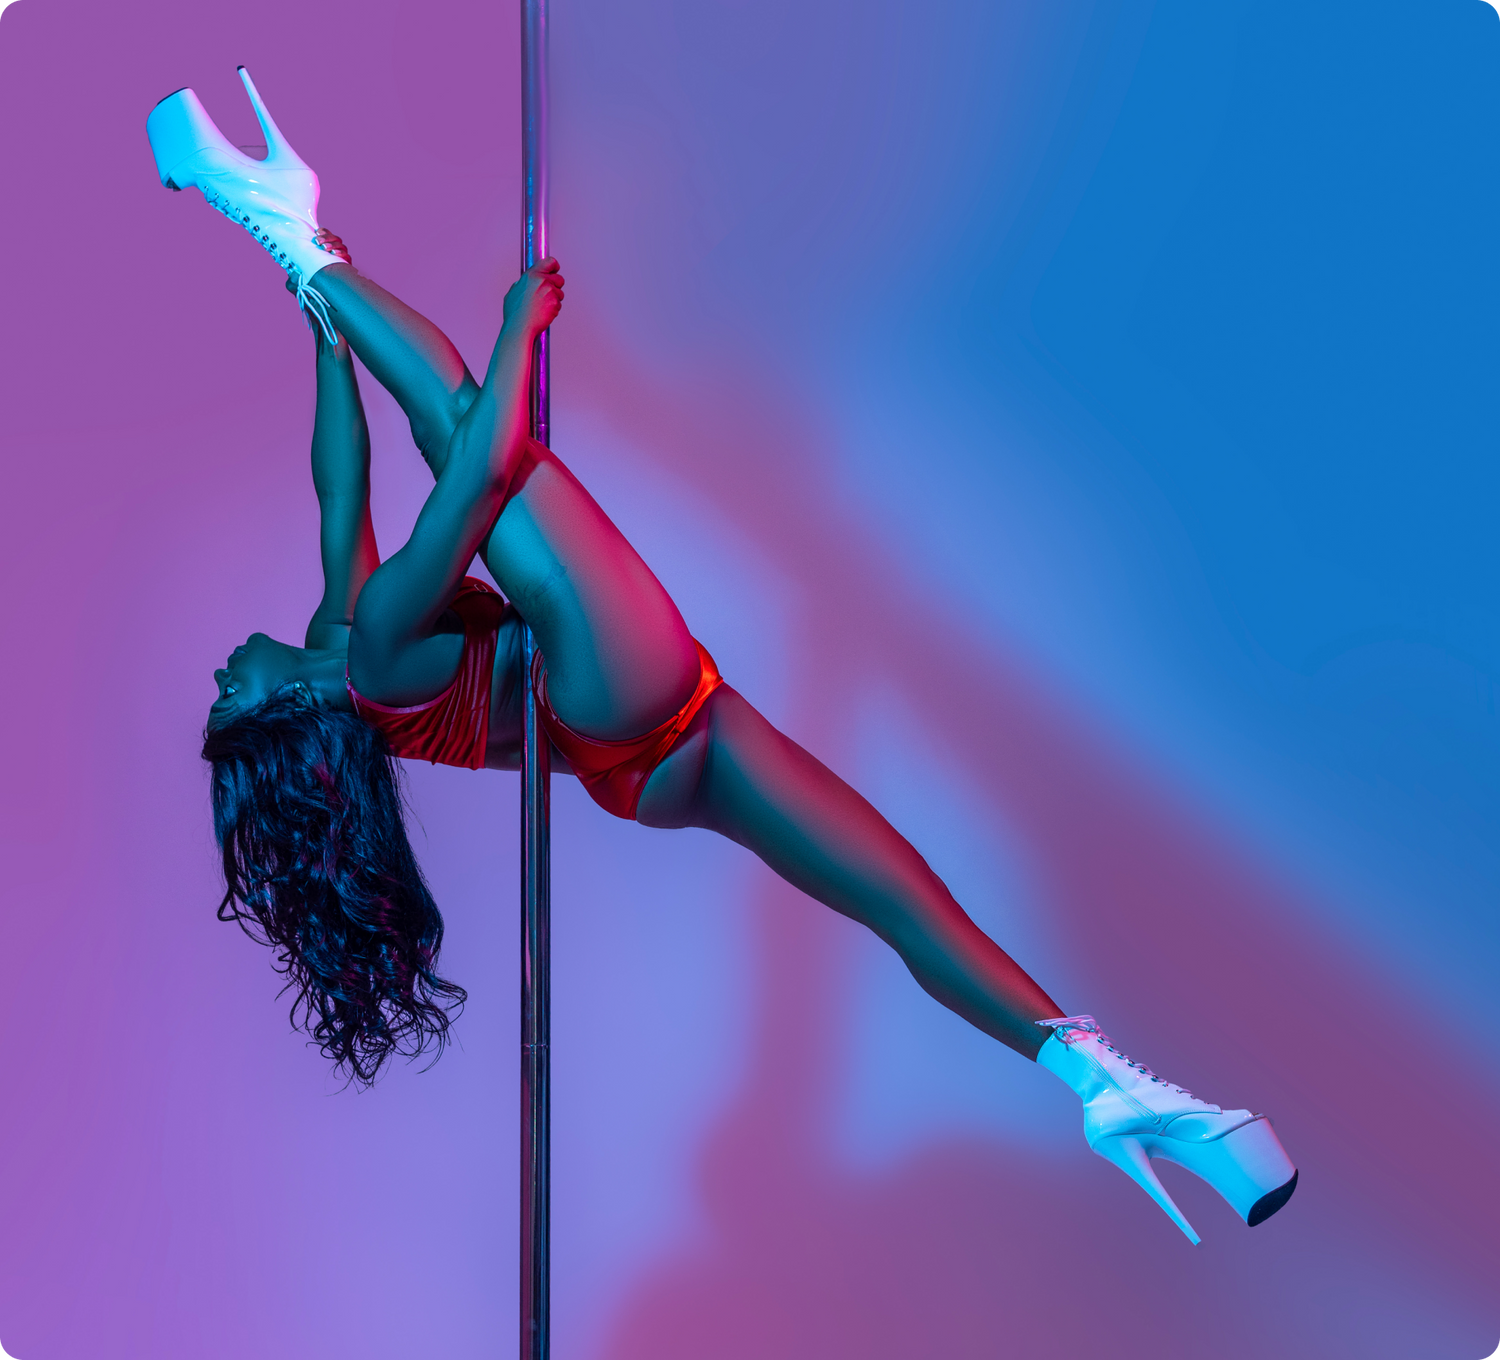 stripper pole